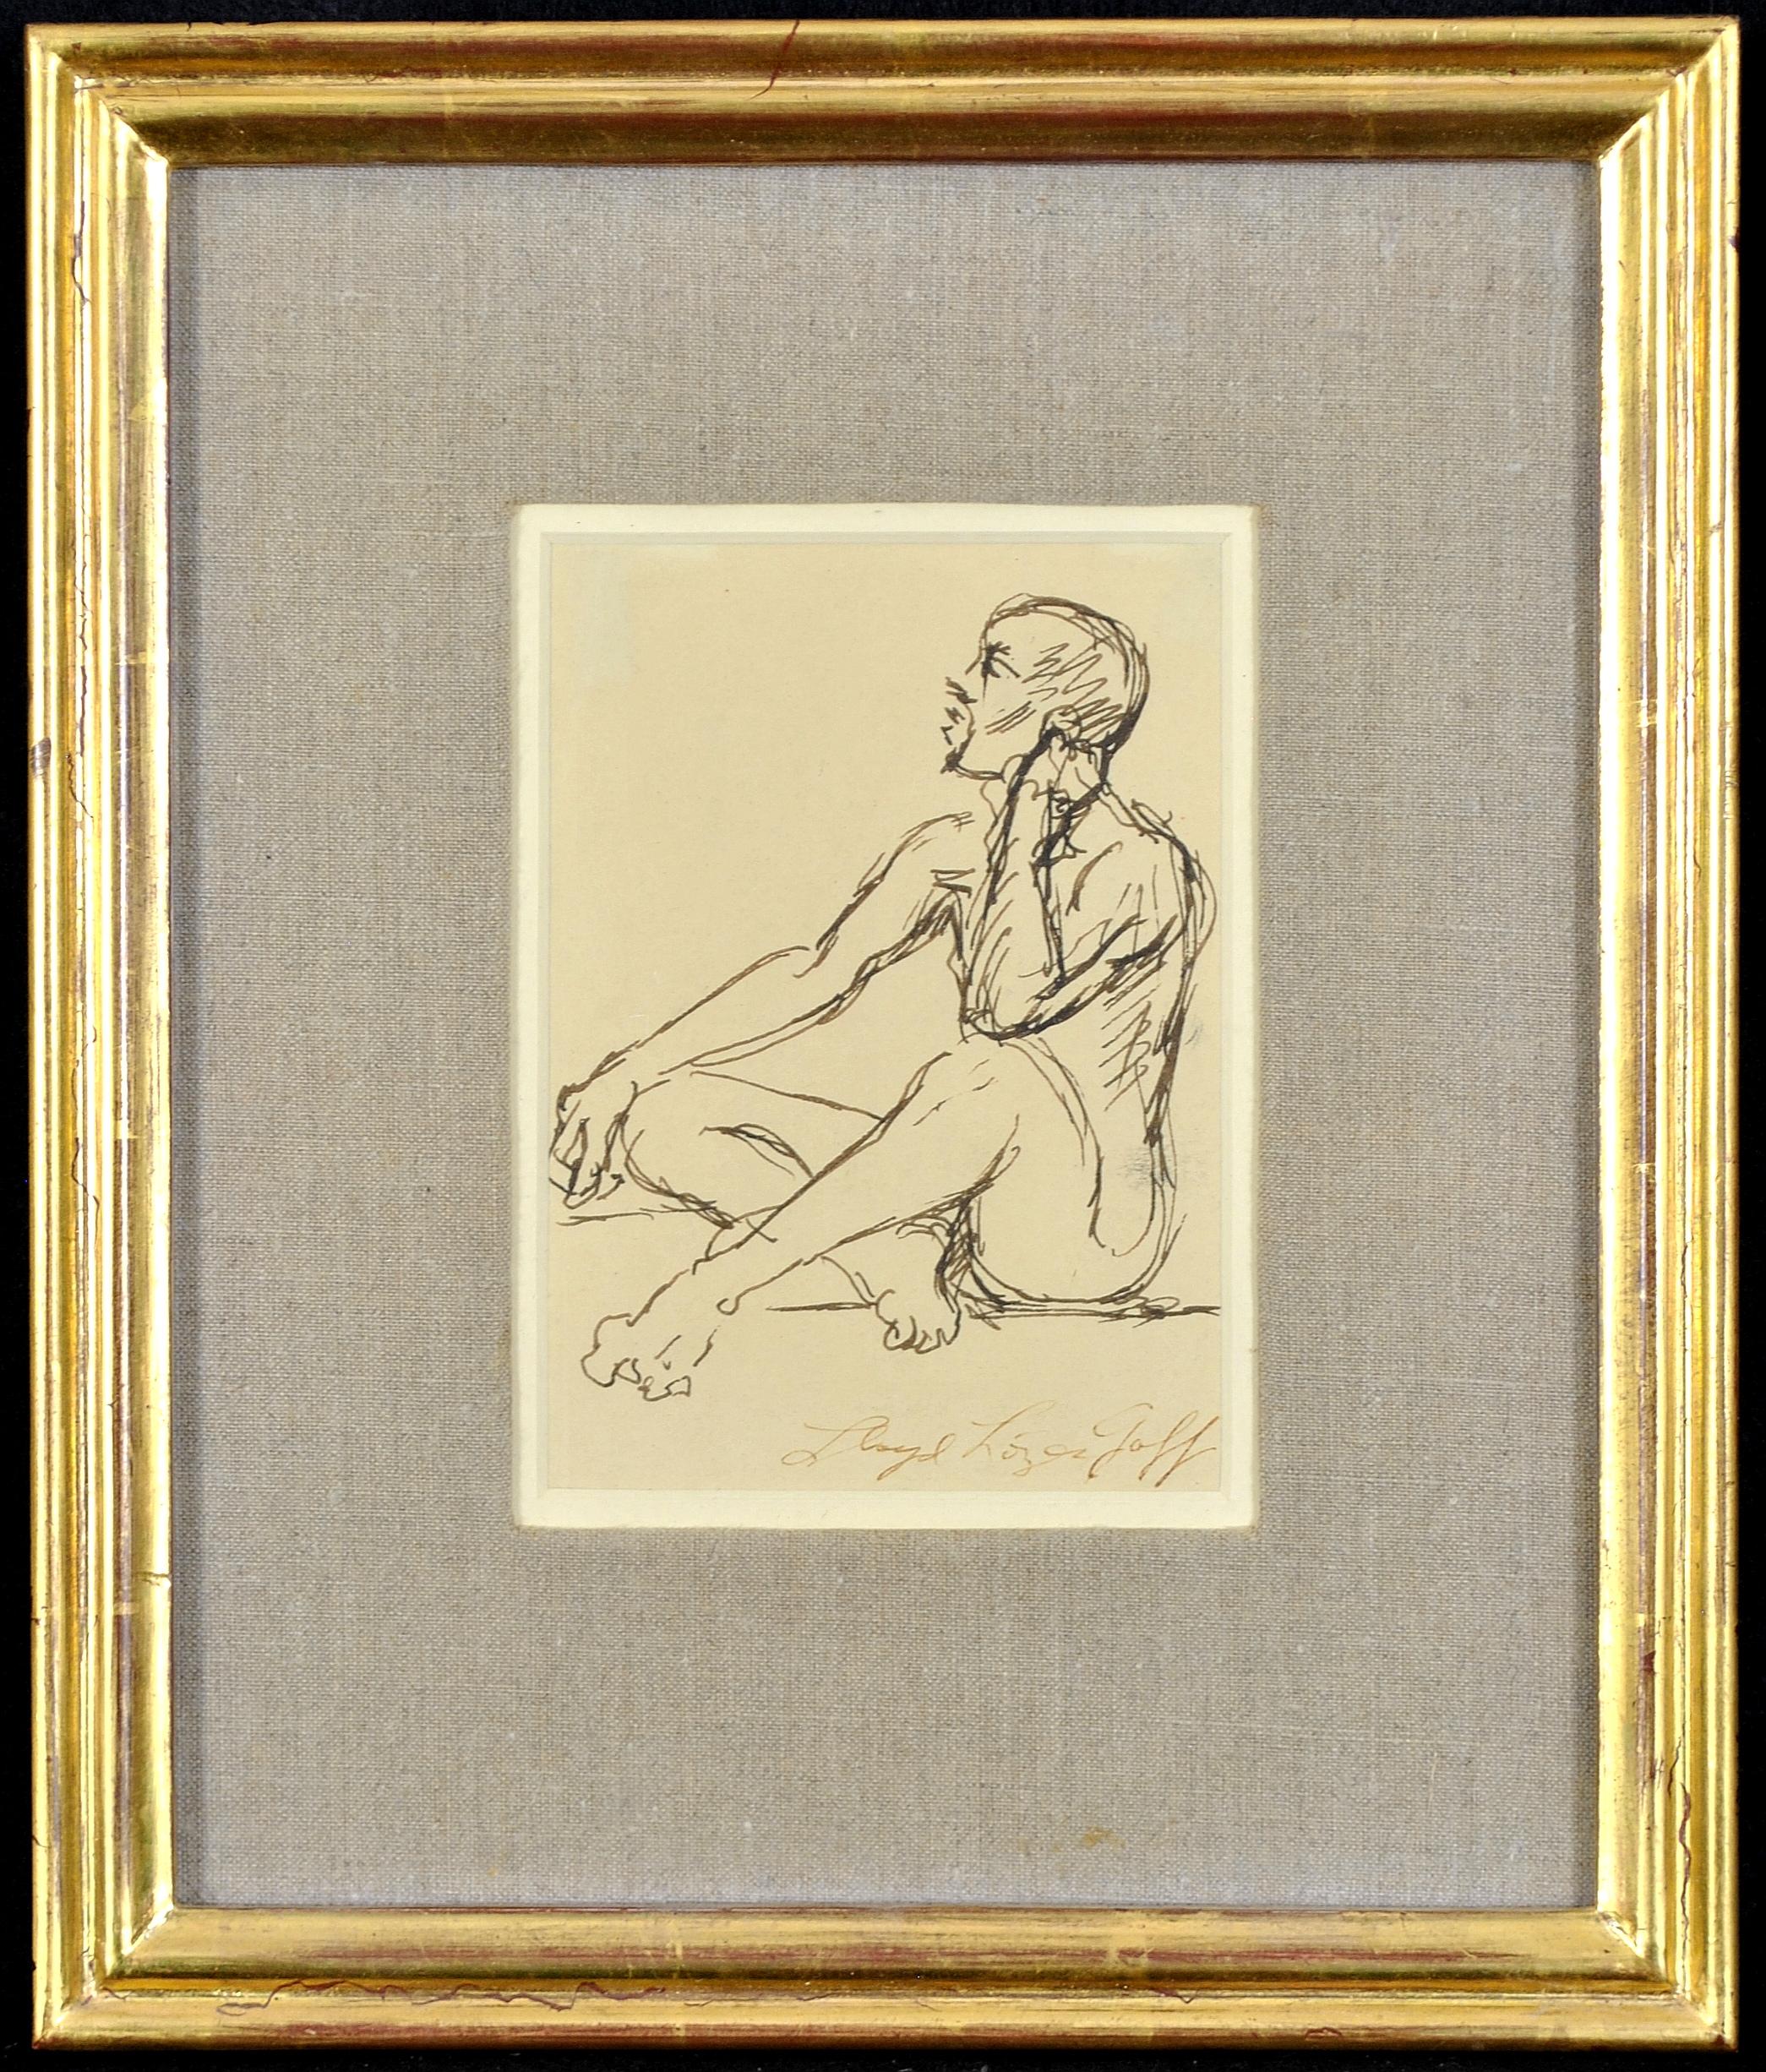 Lloyd Lozes Goff Figurative Art - Listening - MId 20th Century American Figurative Portrait Study of a Seated Man